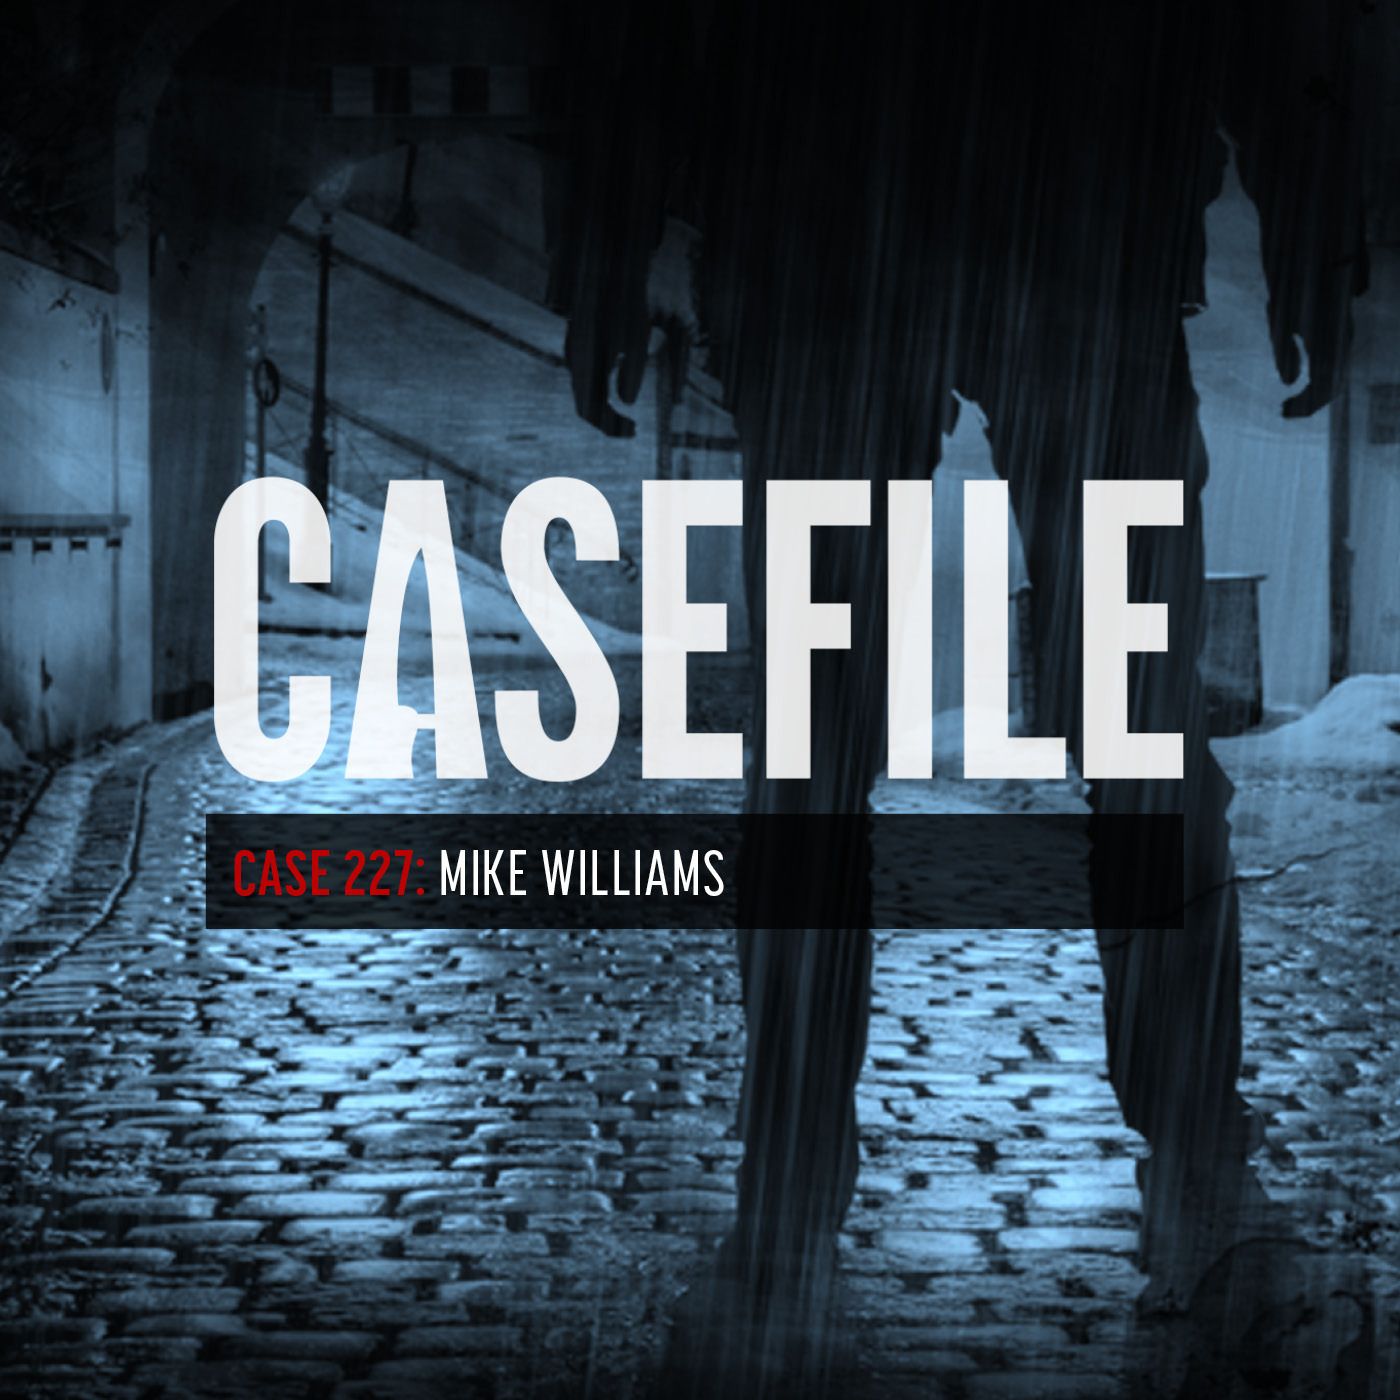 Case 227: Mike Williams